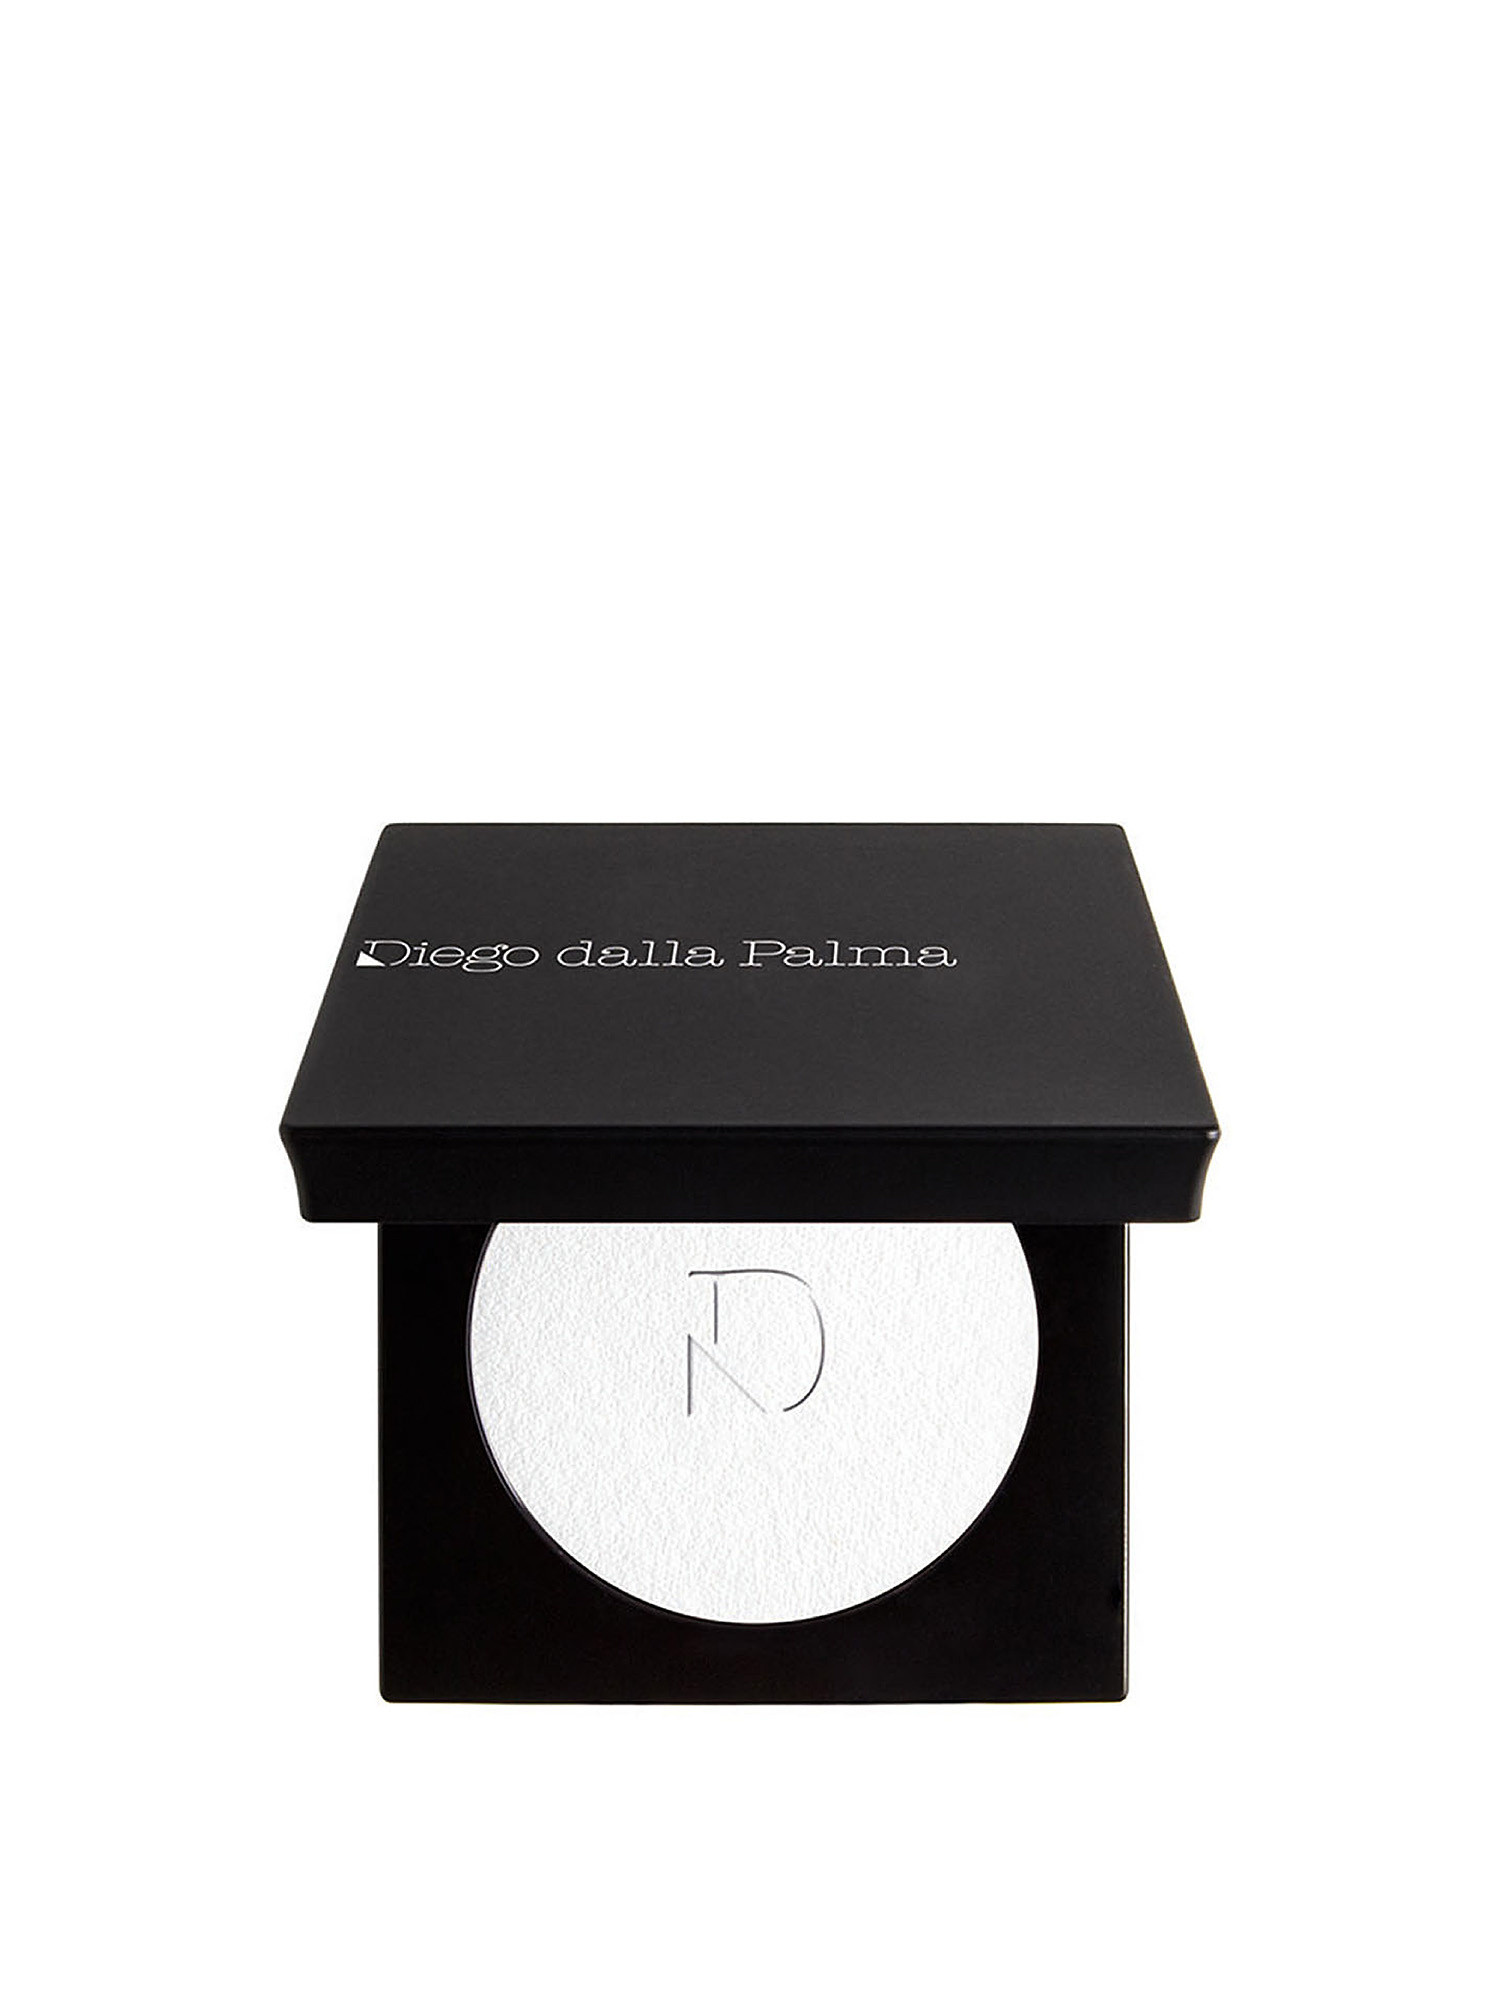 Makeupstudio Polvere Compatta Per Occhi Opaca - 151 optical white, Bianco, large image number 0